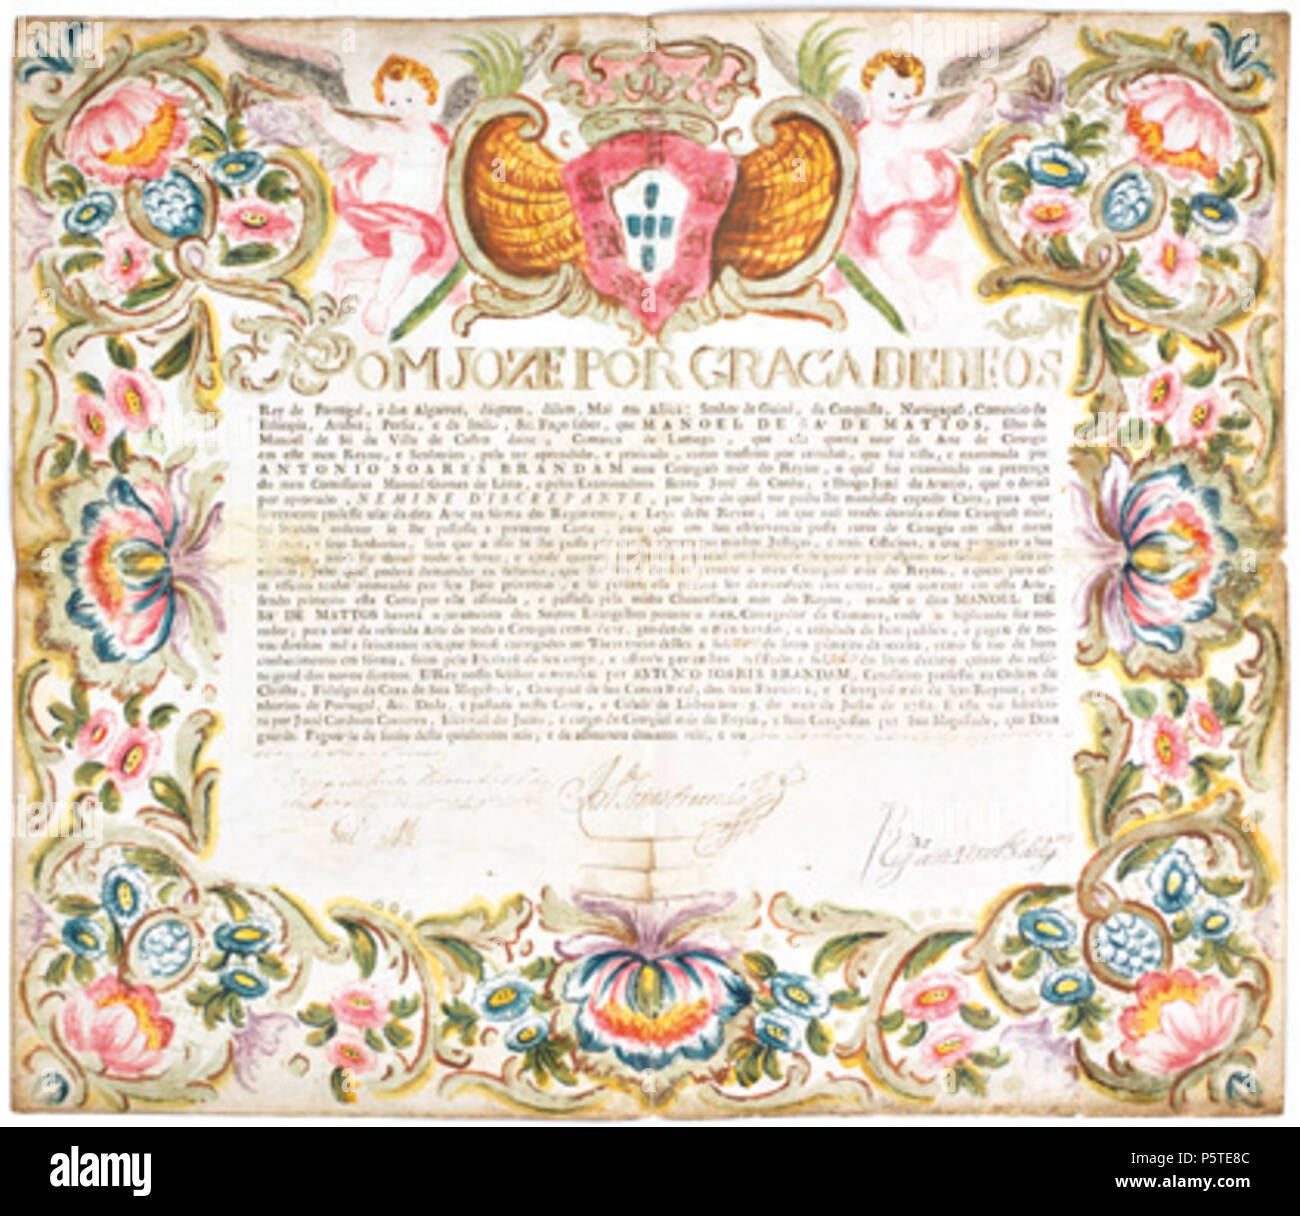 277 Carta de Cirurgião dada un Manuel de Sá de Mattos (5 de Julho de 1762) Foto Stock